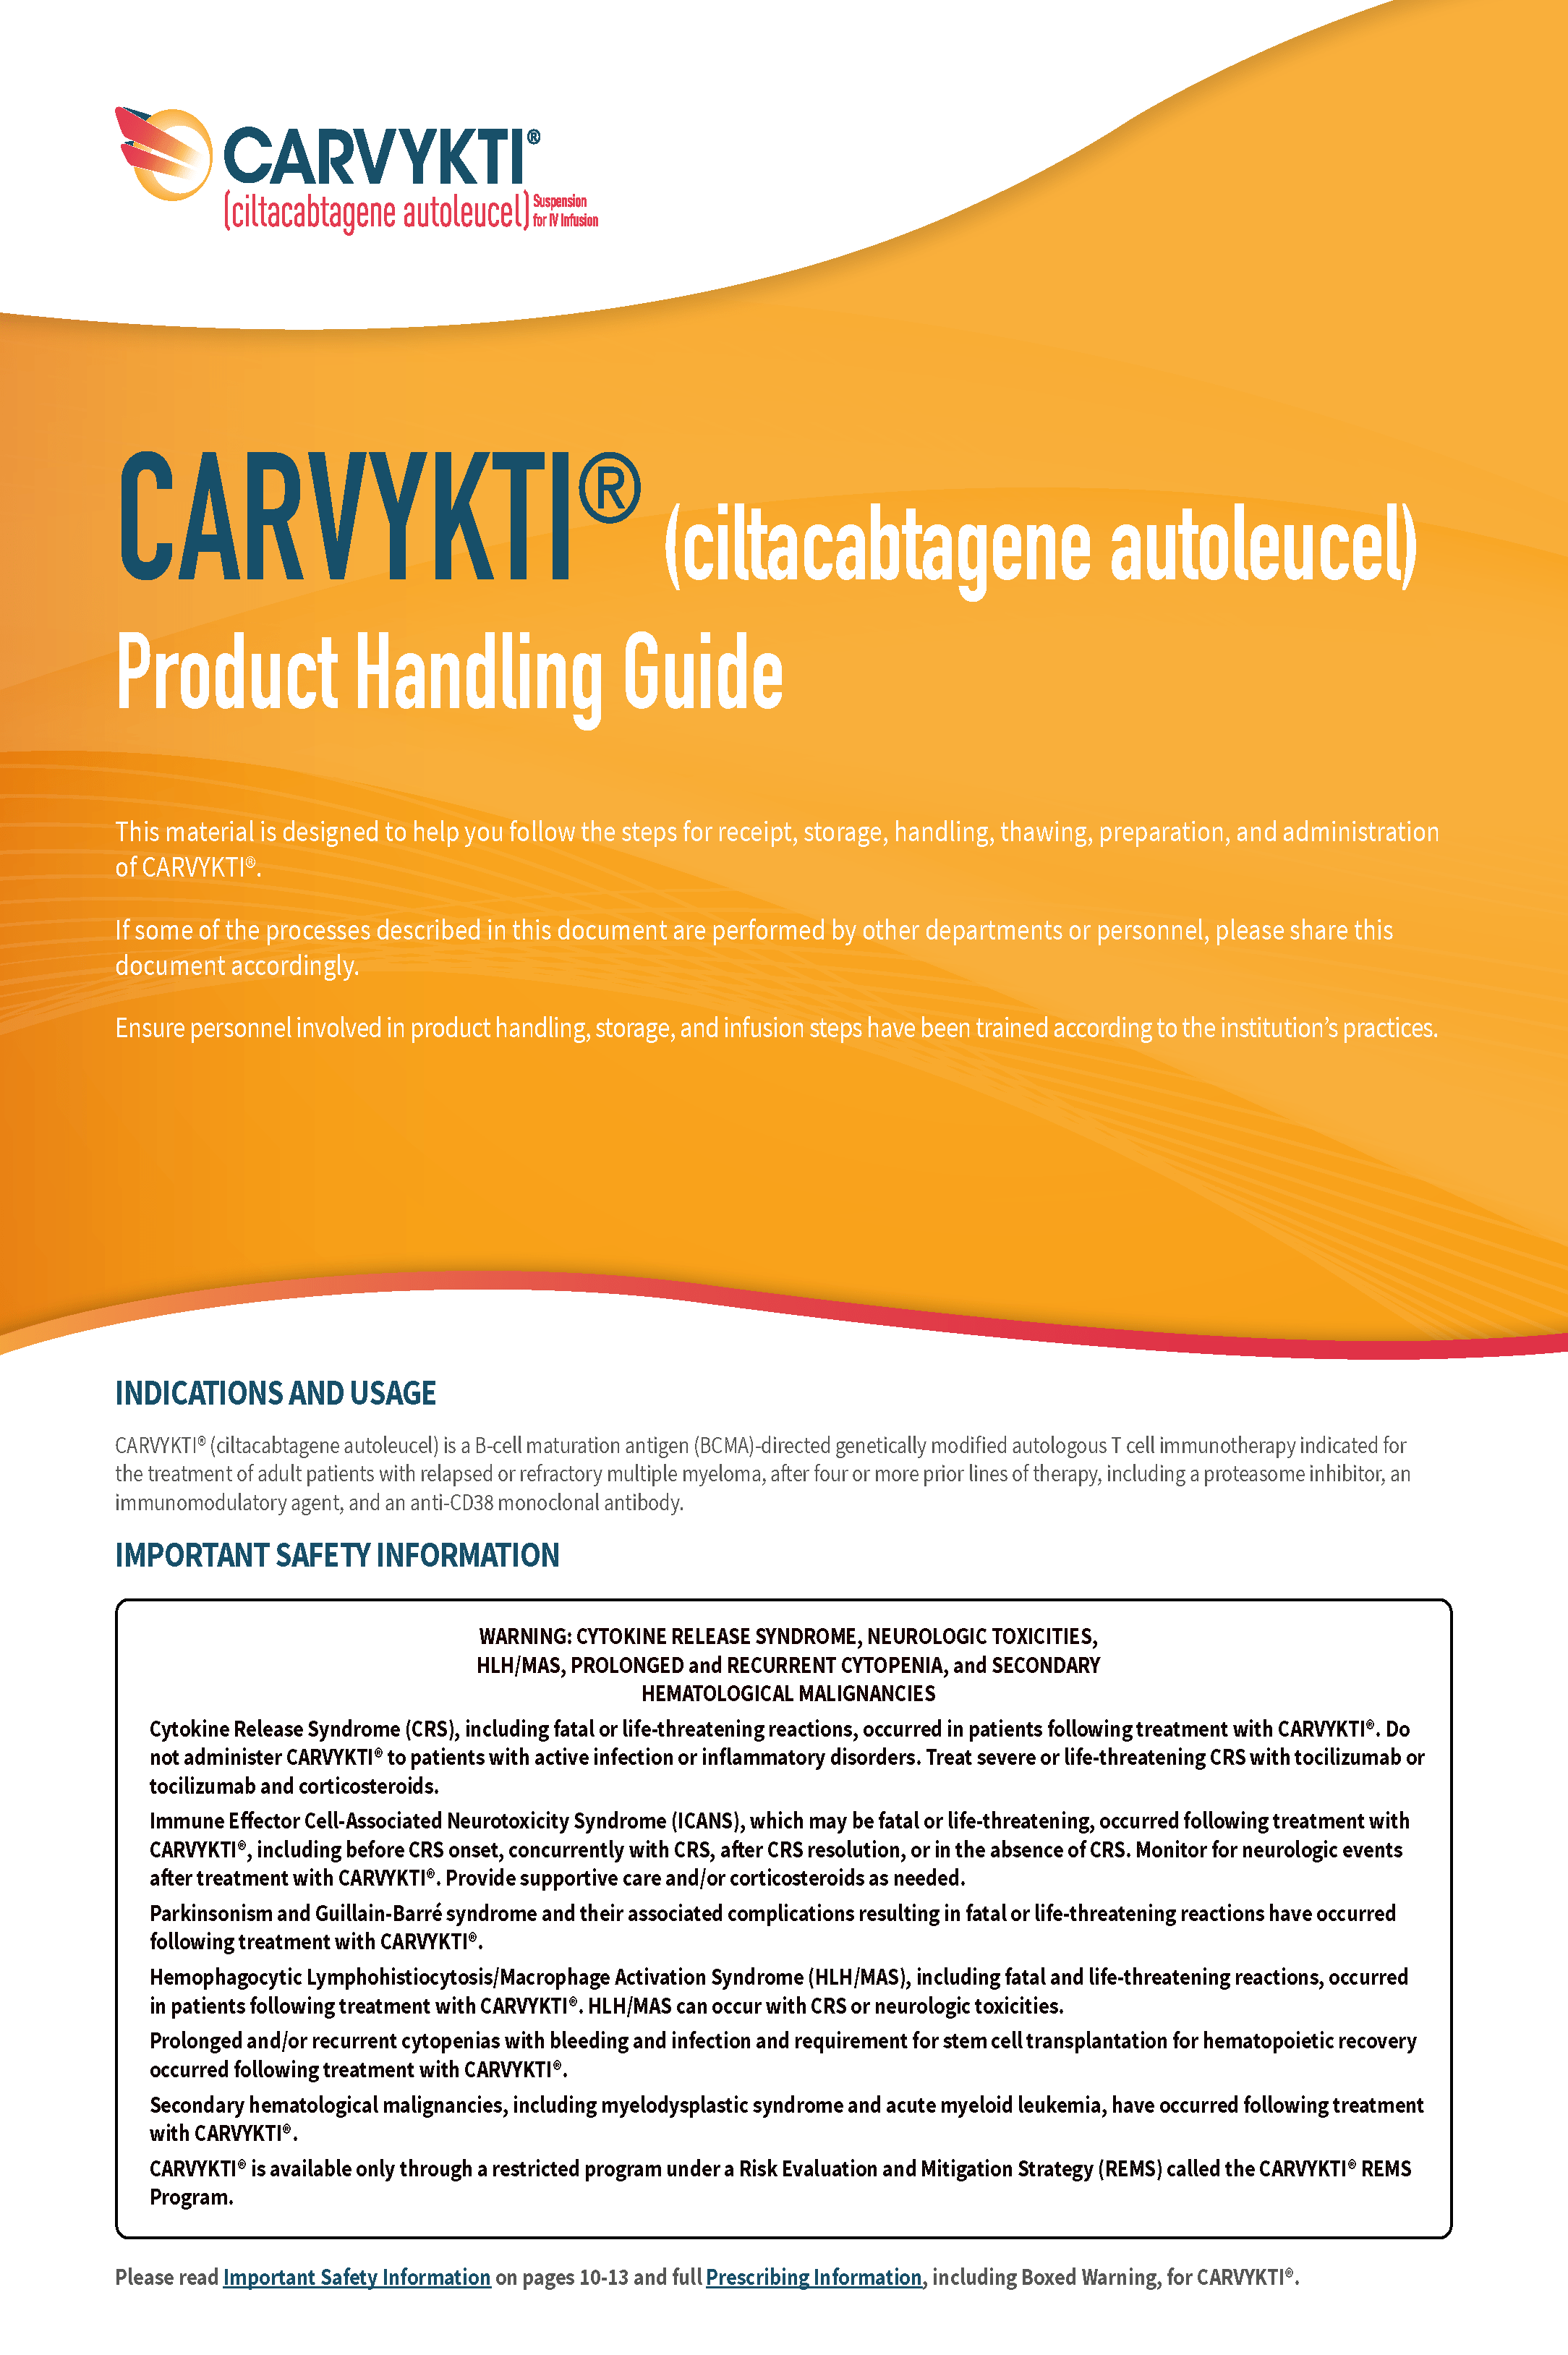 CARVYKTI® (ciltacabtagene autoleucel) product handling guide